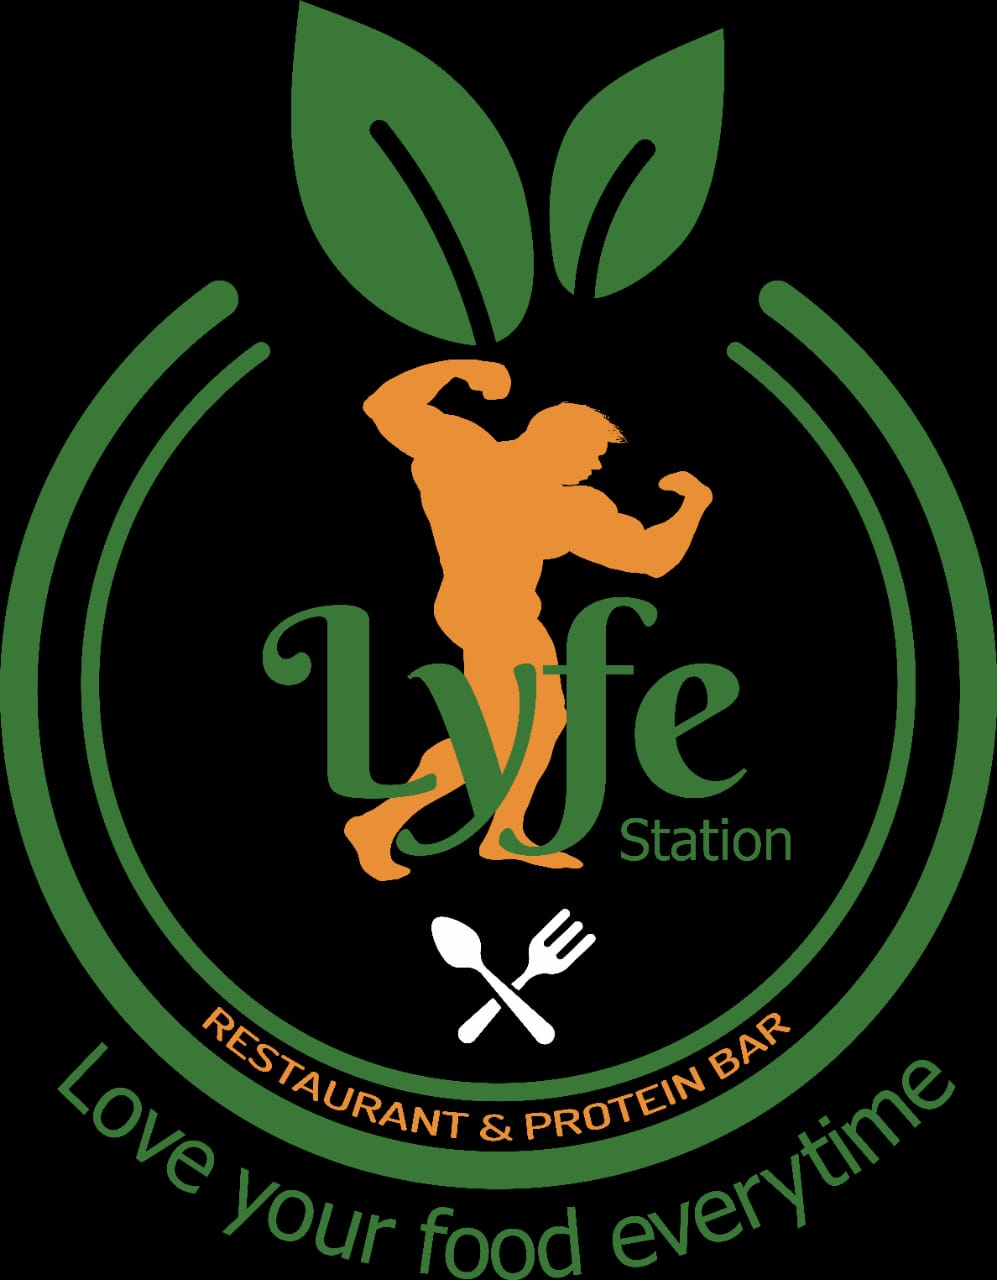 Lyfe Station Cafe & Protein Bar